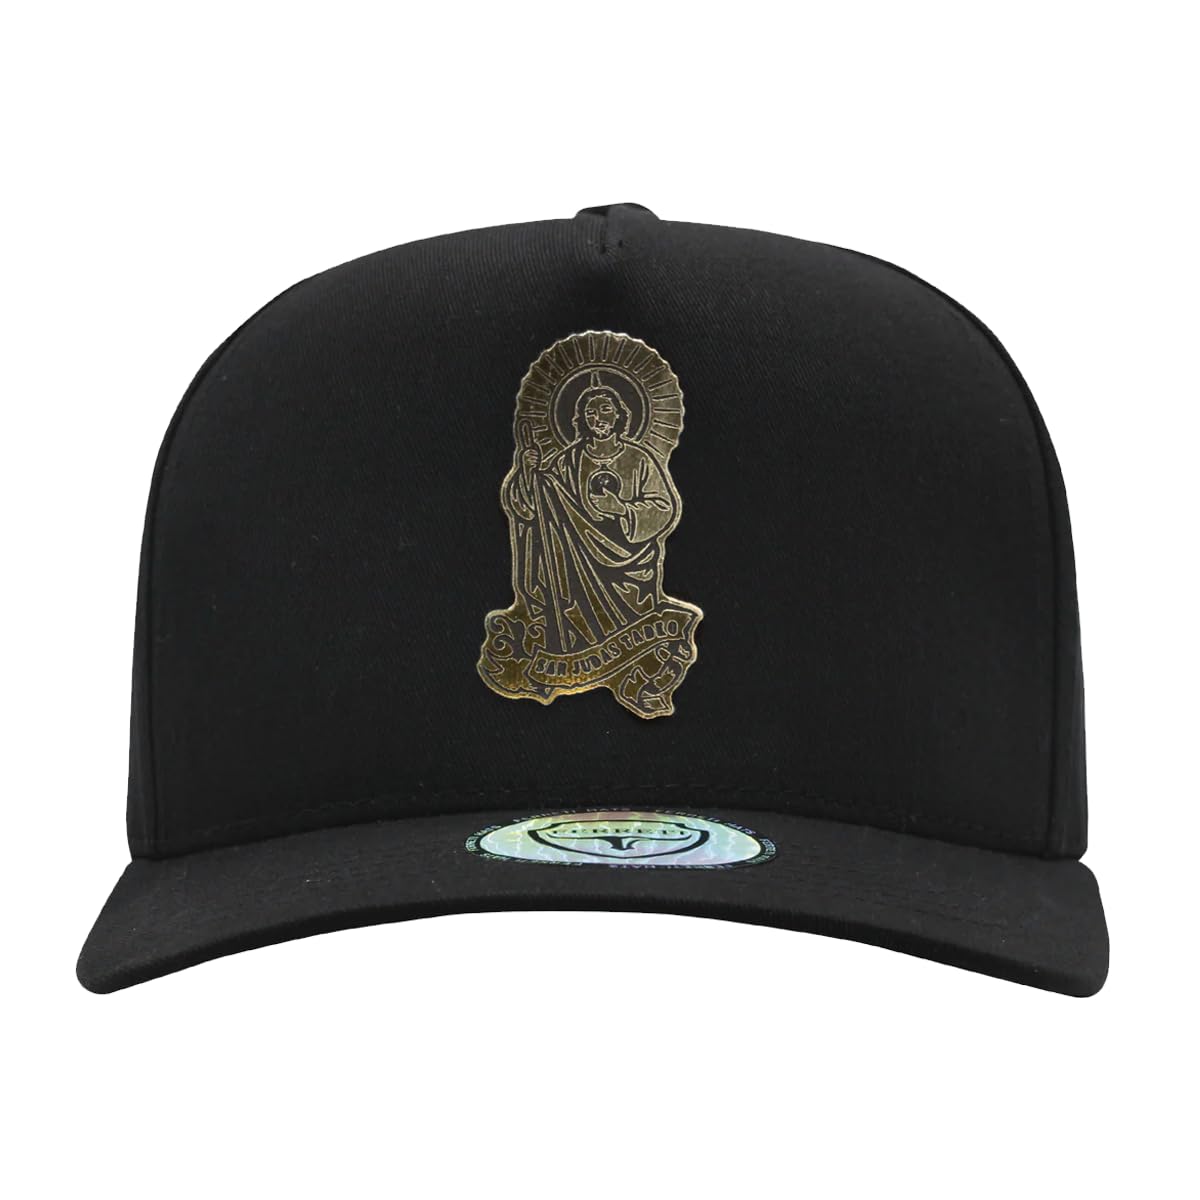 Culiacan Saint Jude Black Snapback Hats for Men - Premium Men's Hats & Caps, Black Baseball Cap for Men and Women, Gorra para Hombre - Ajustable Size - Caps Fitted Caps Fitted Ferreti